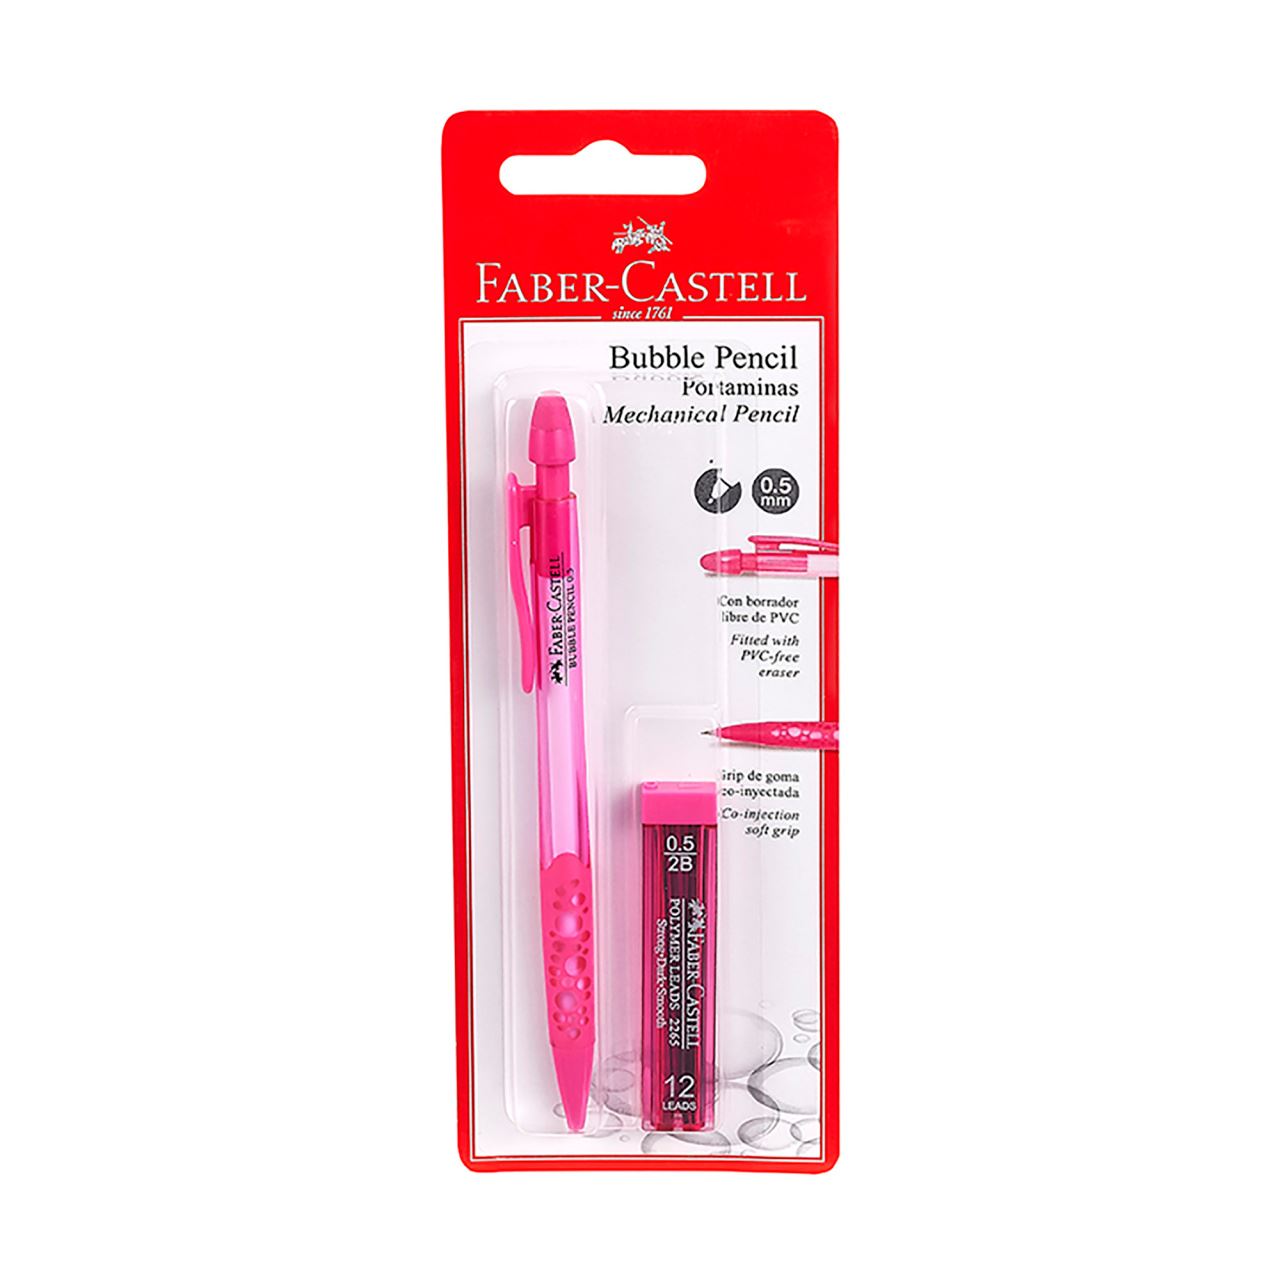 Faber-Castell - Portaminas bubble pencil 0,5 rosado + minas blíster x1